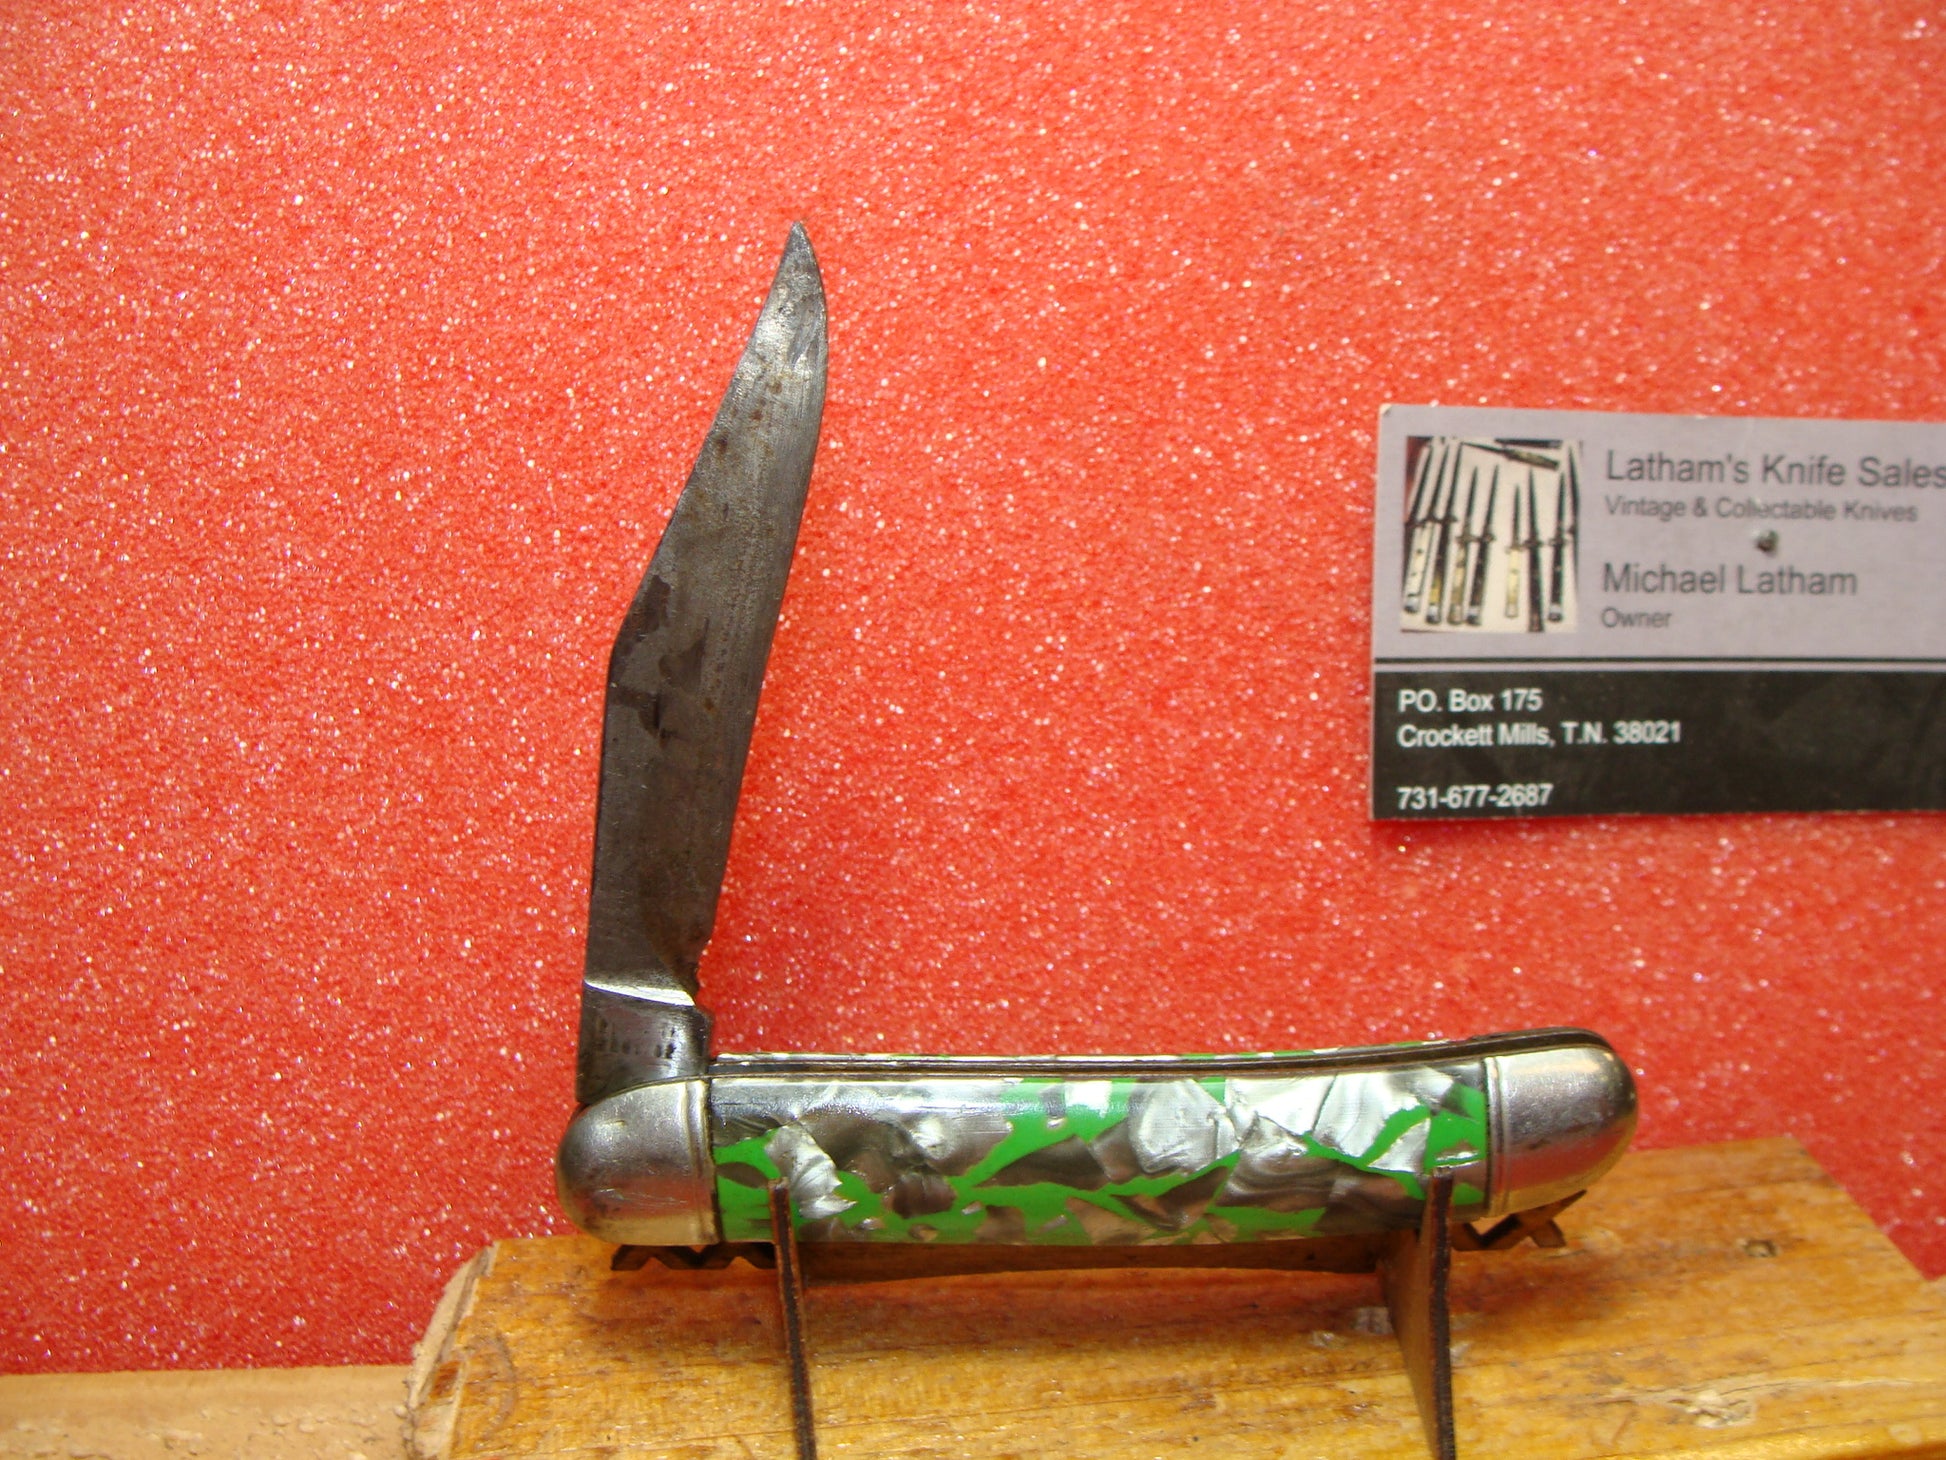 Hammer Brand Pocket Knife